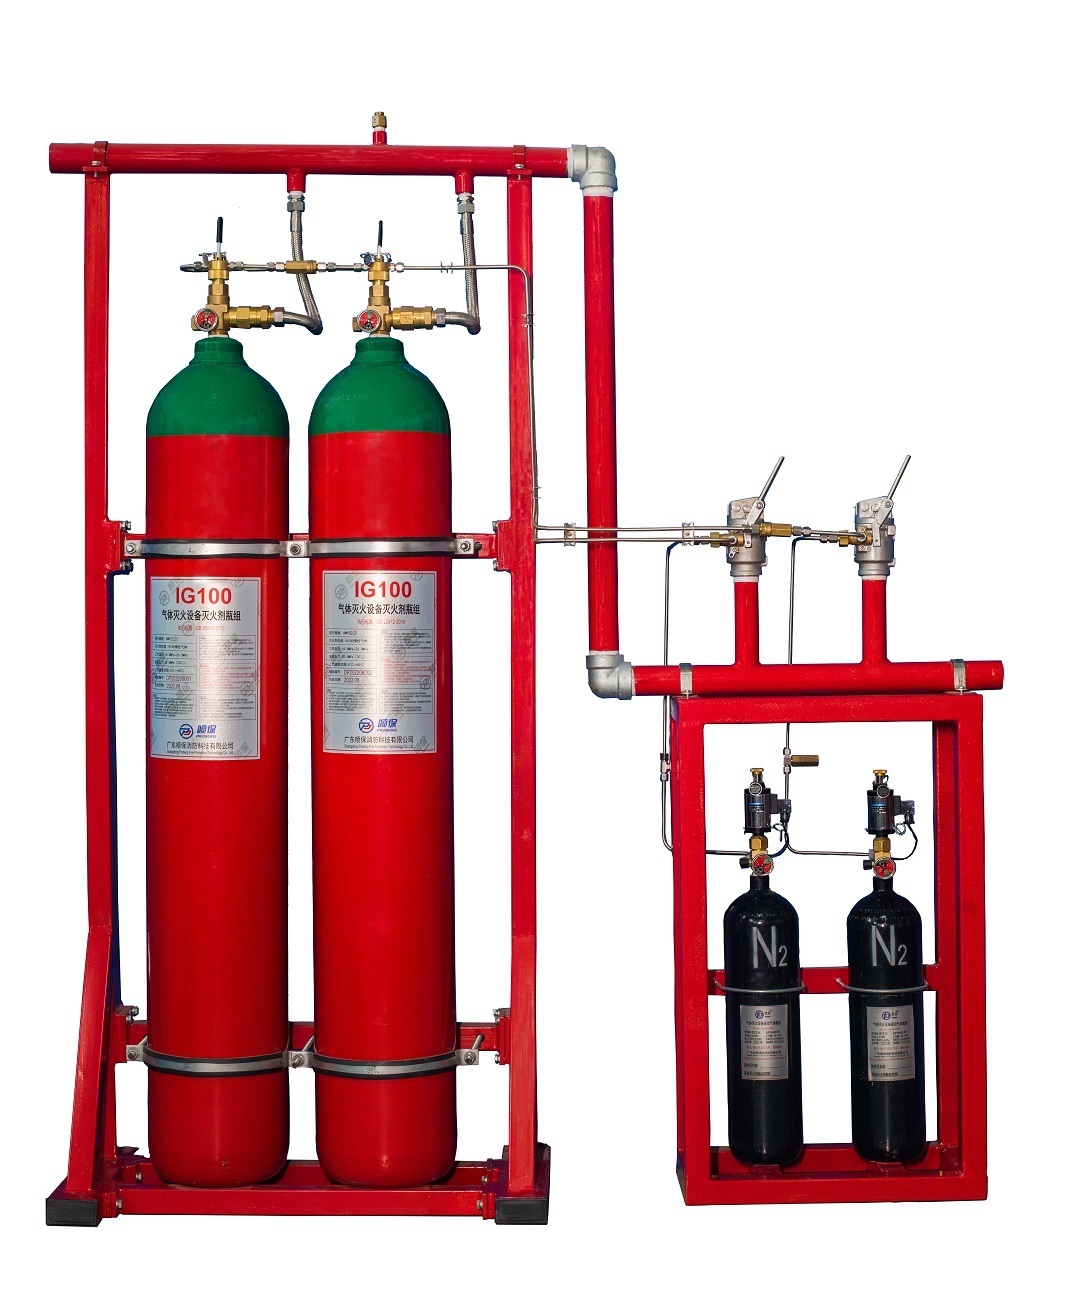 IG100 fire extinguishing equipment (20MPa)